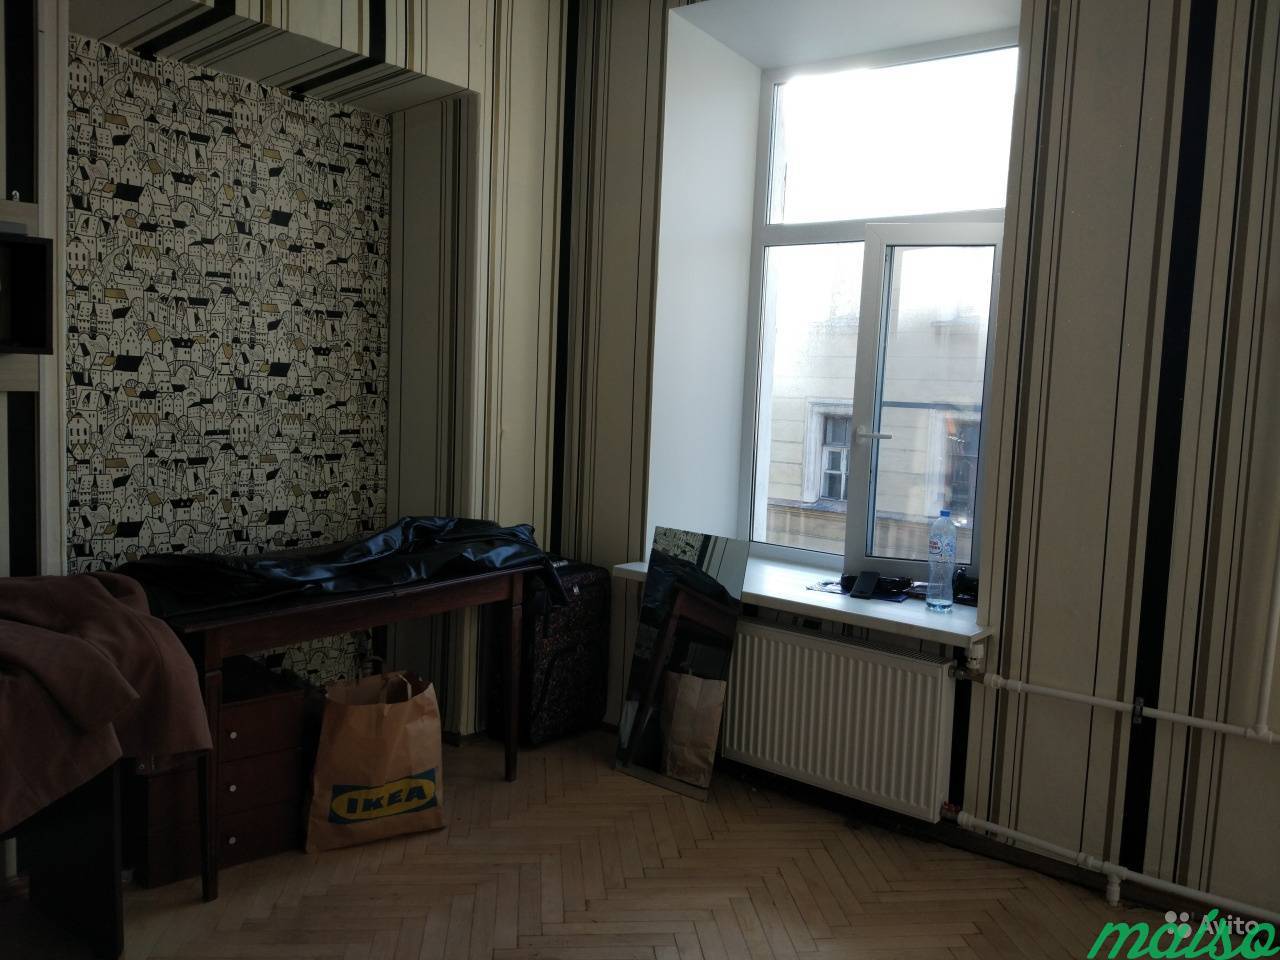 Комната 19 м² в 4-к, 4/5 эт. в Санкт-Петербурге. Фото 3